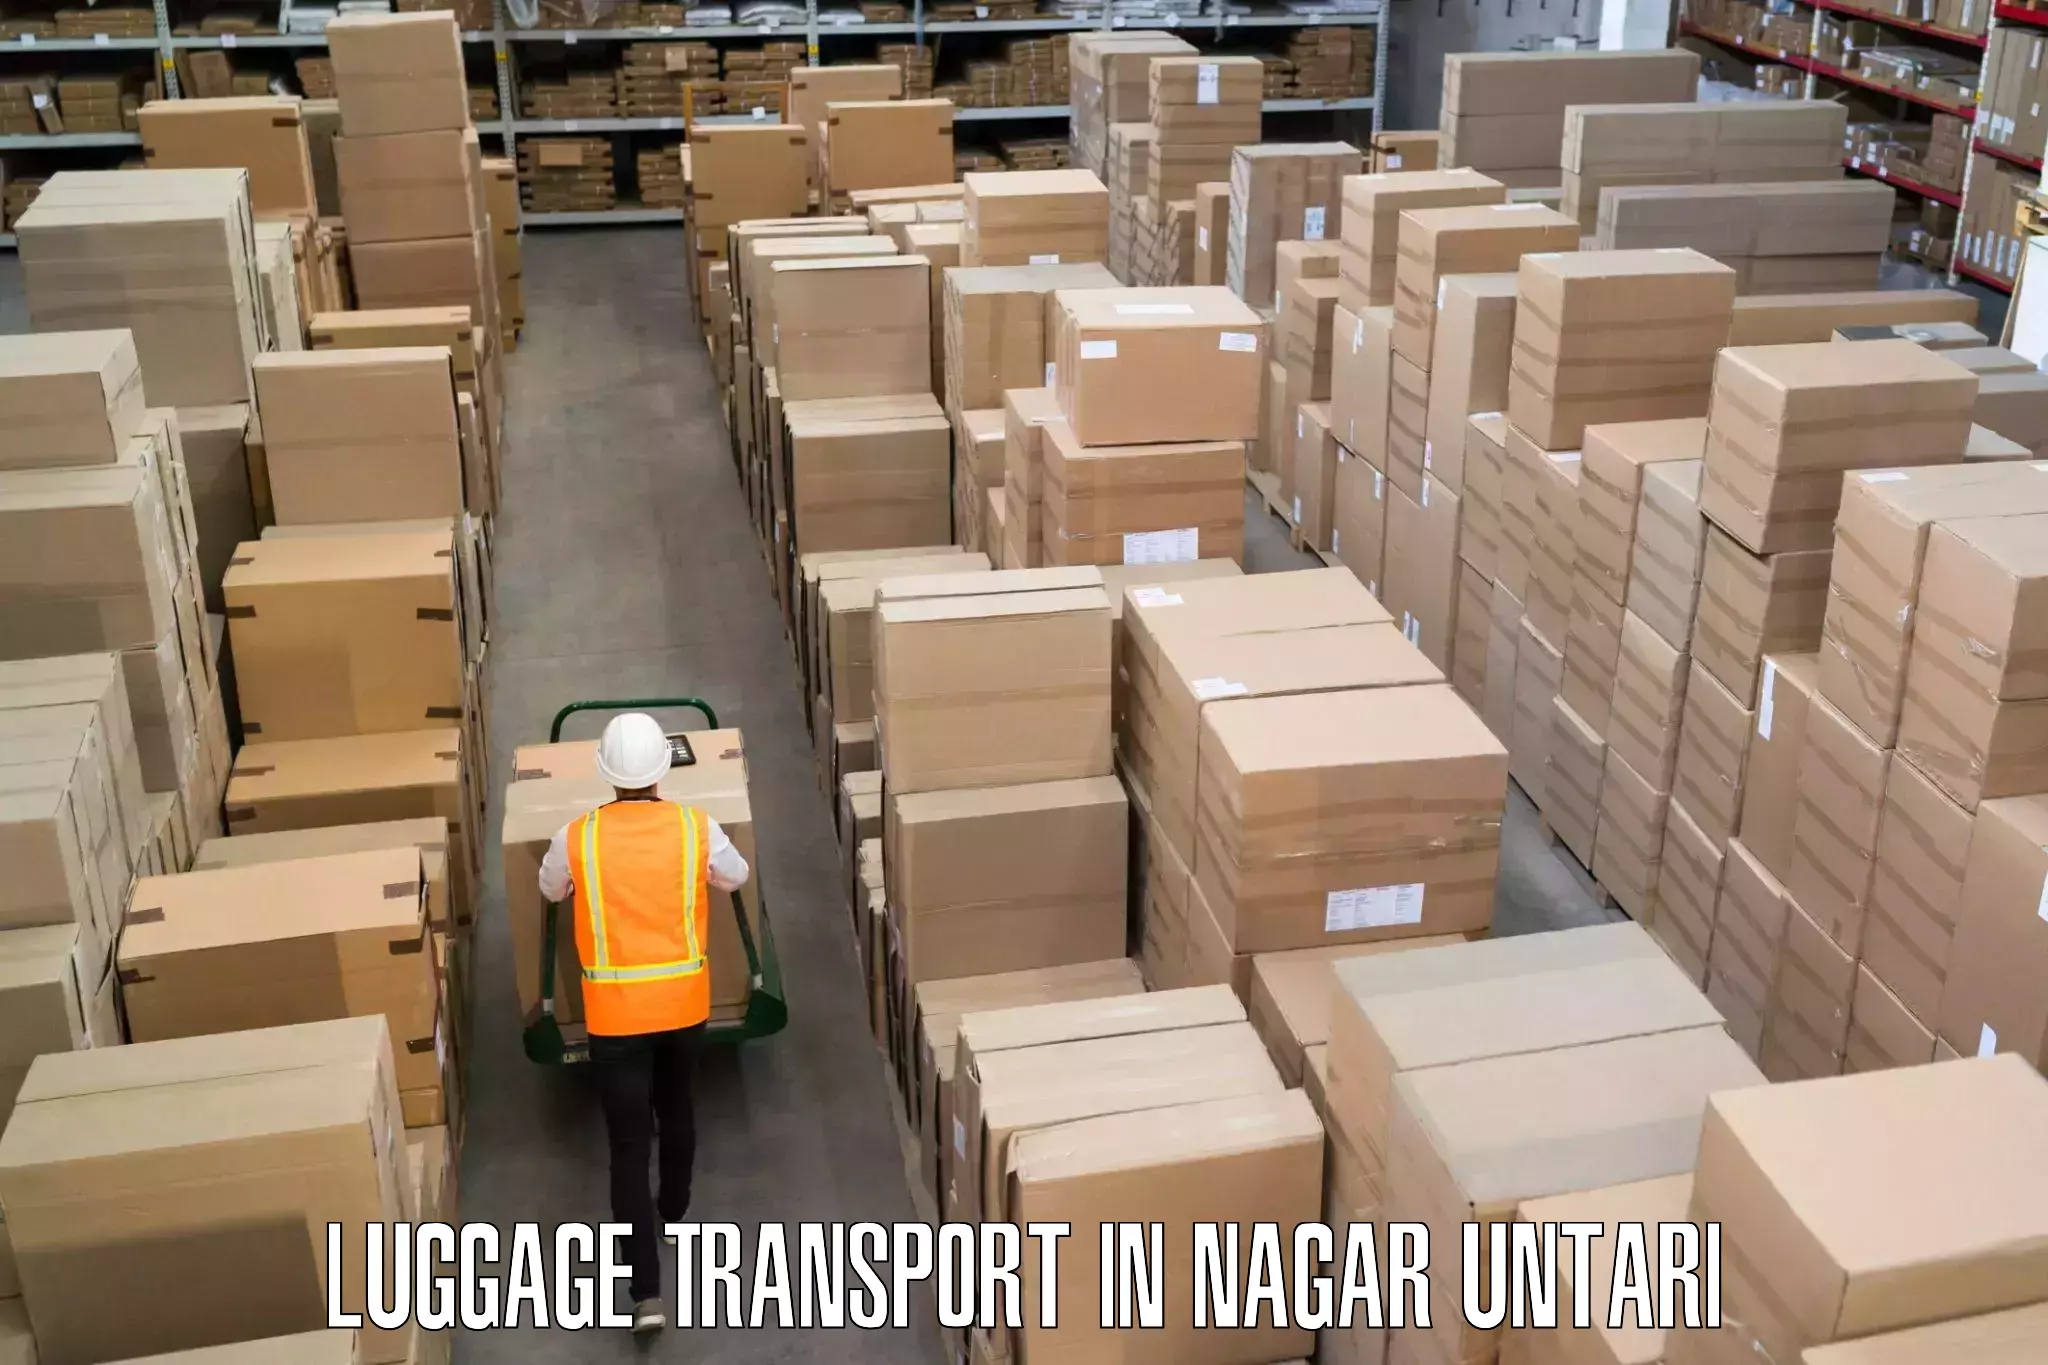 Student luggage transport in Nagar Untari